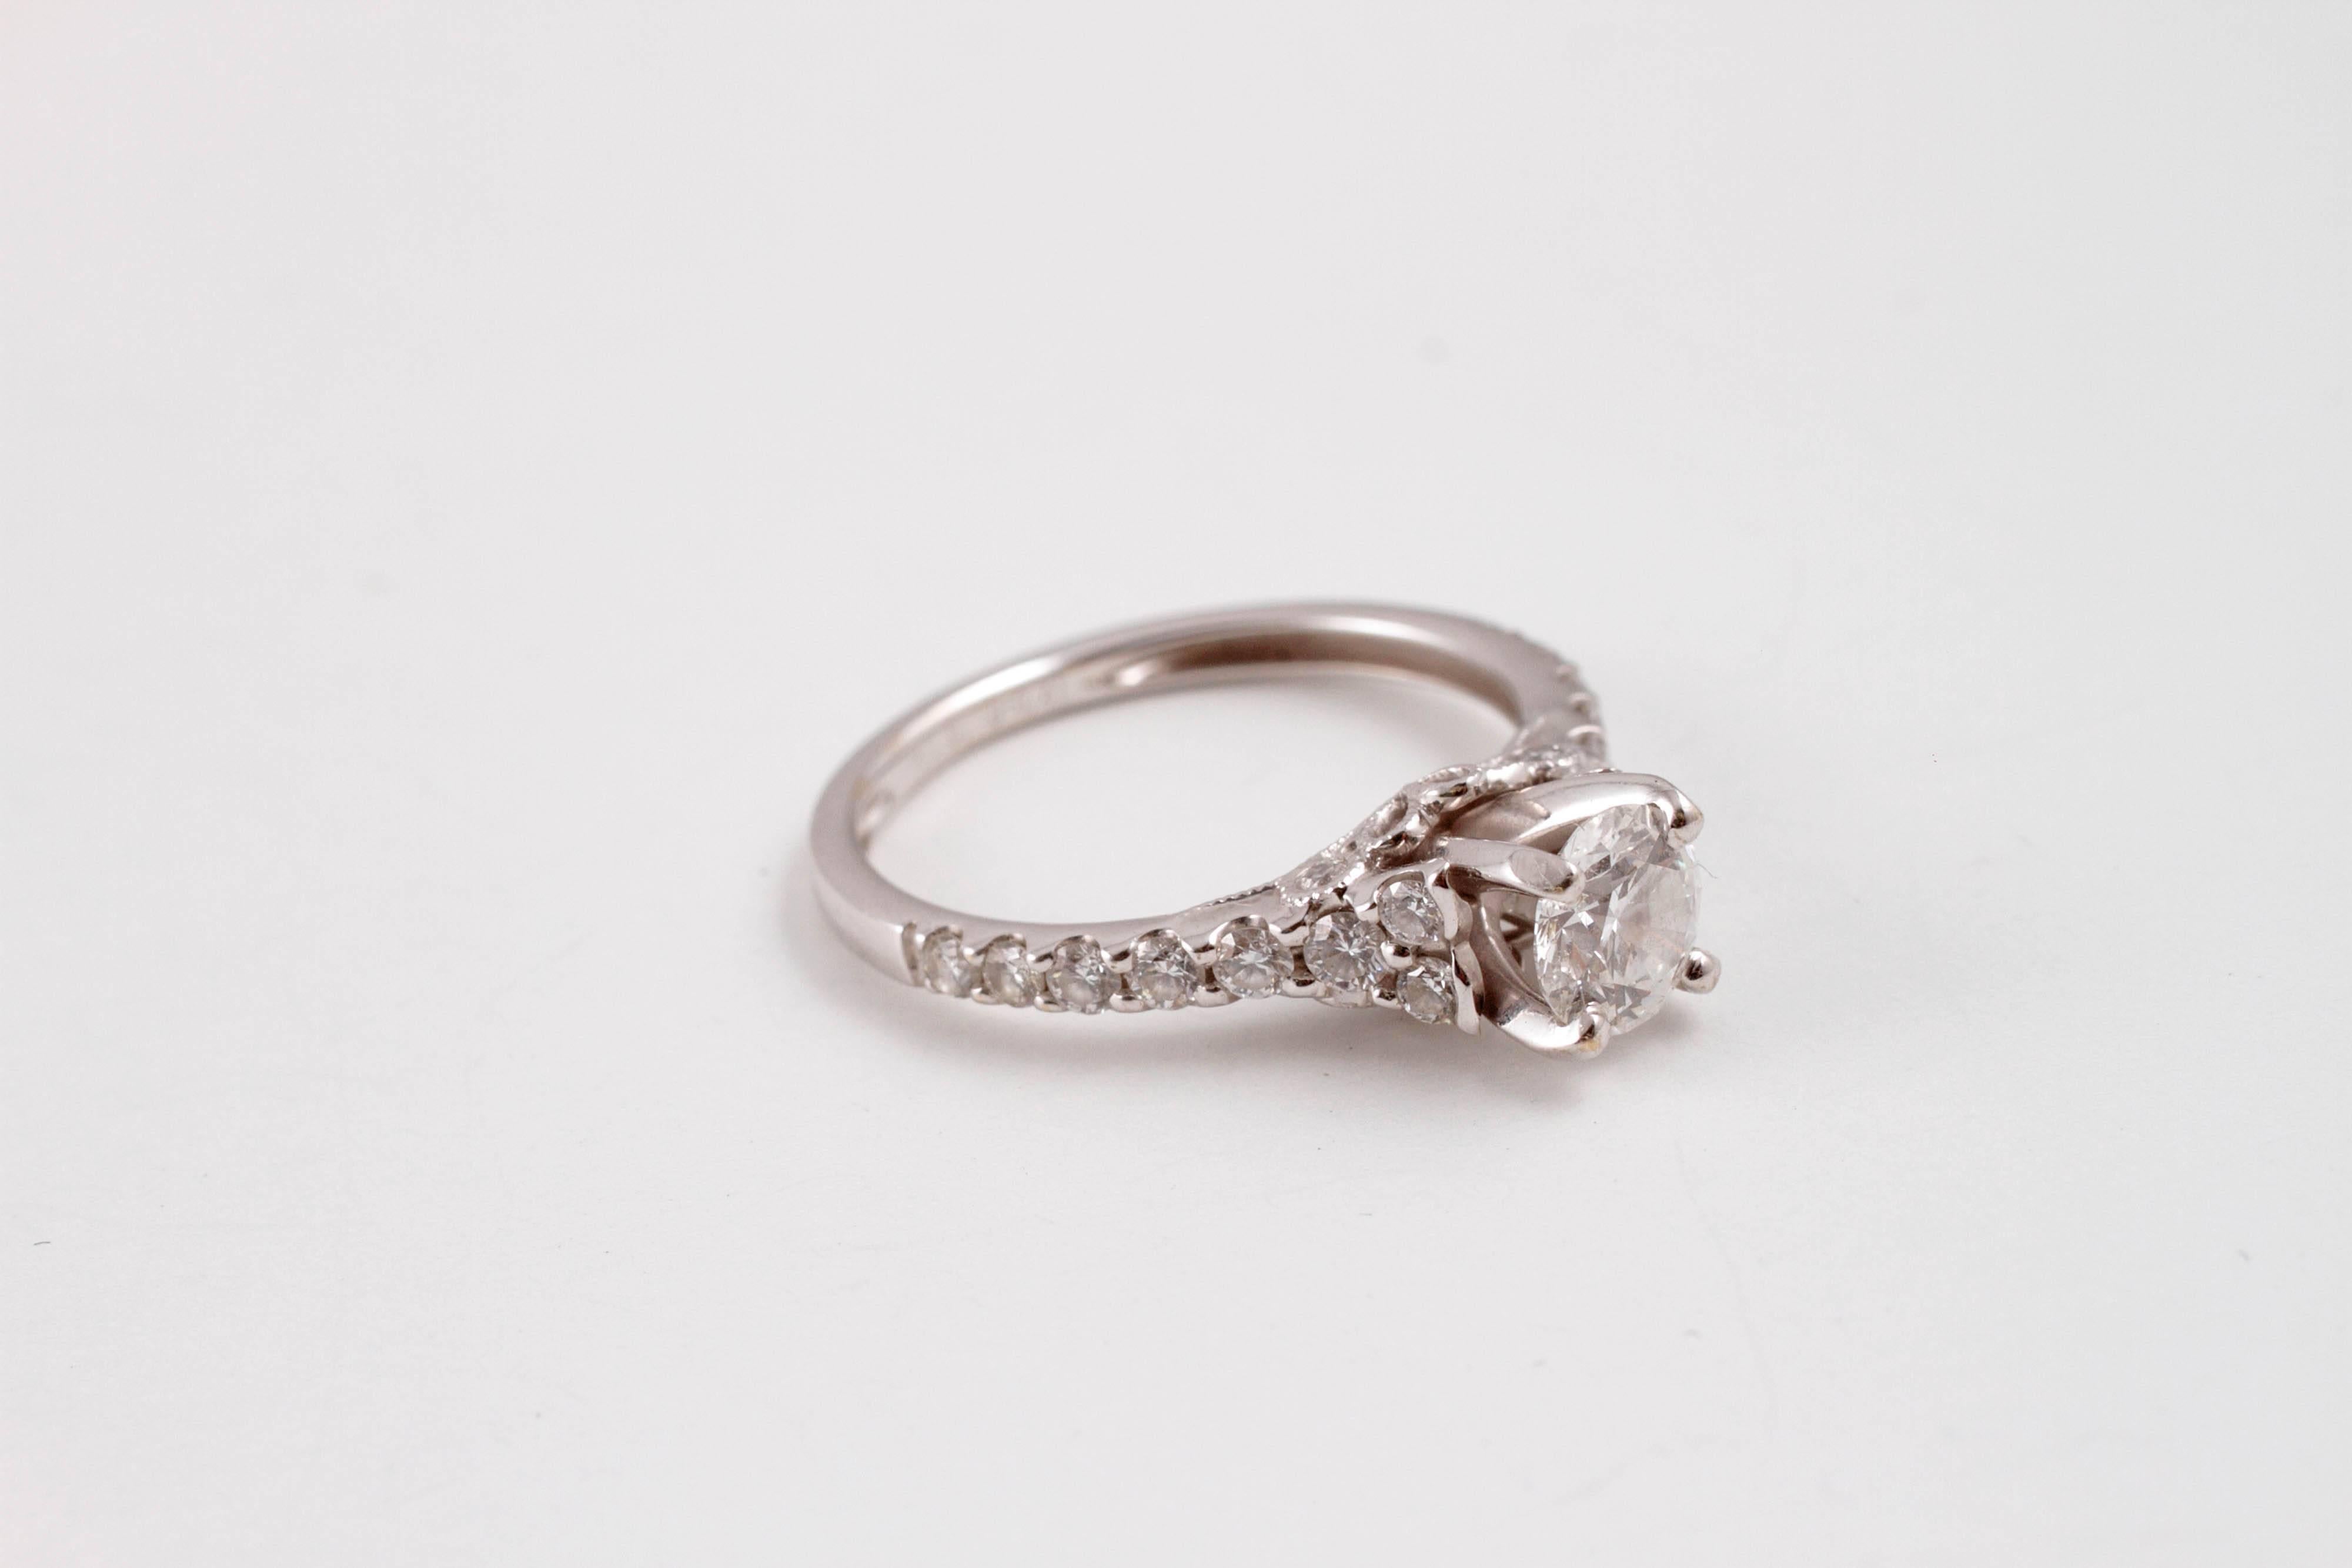 Round Cut White Gold Diamond Engagement Ring GIA Certified 0.61 Carat Center